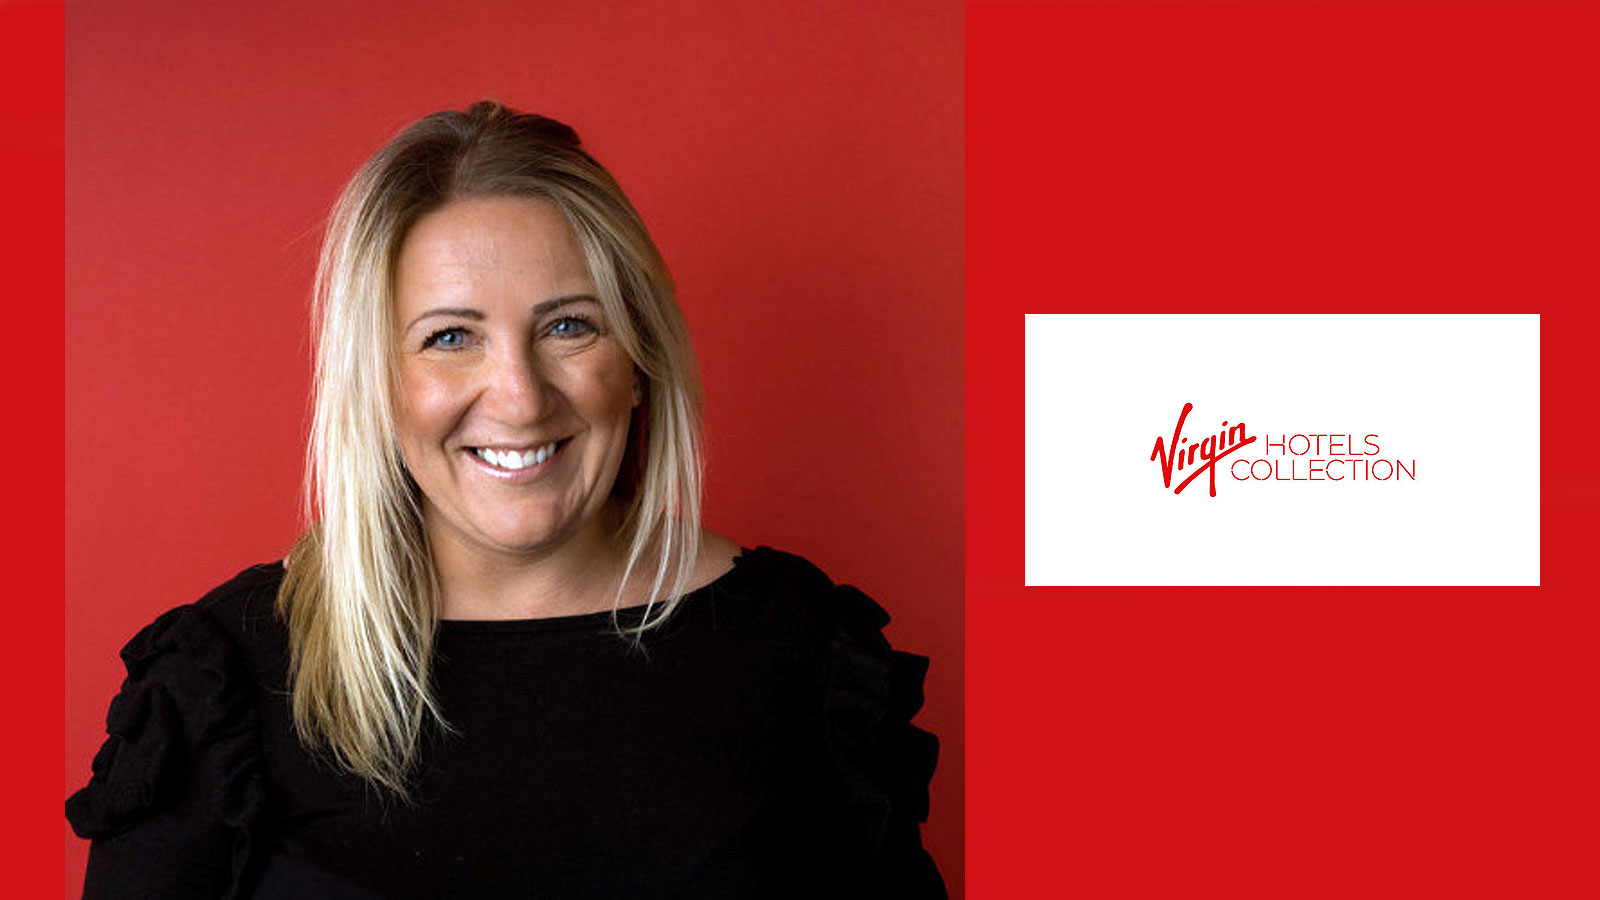 Virgin Hotels Collection names Naomi Moreno-Melgar Global Director of Communications